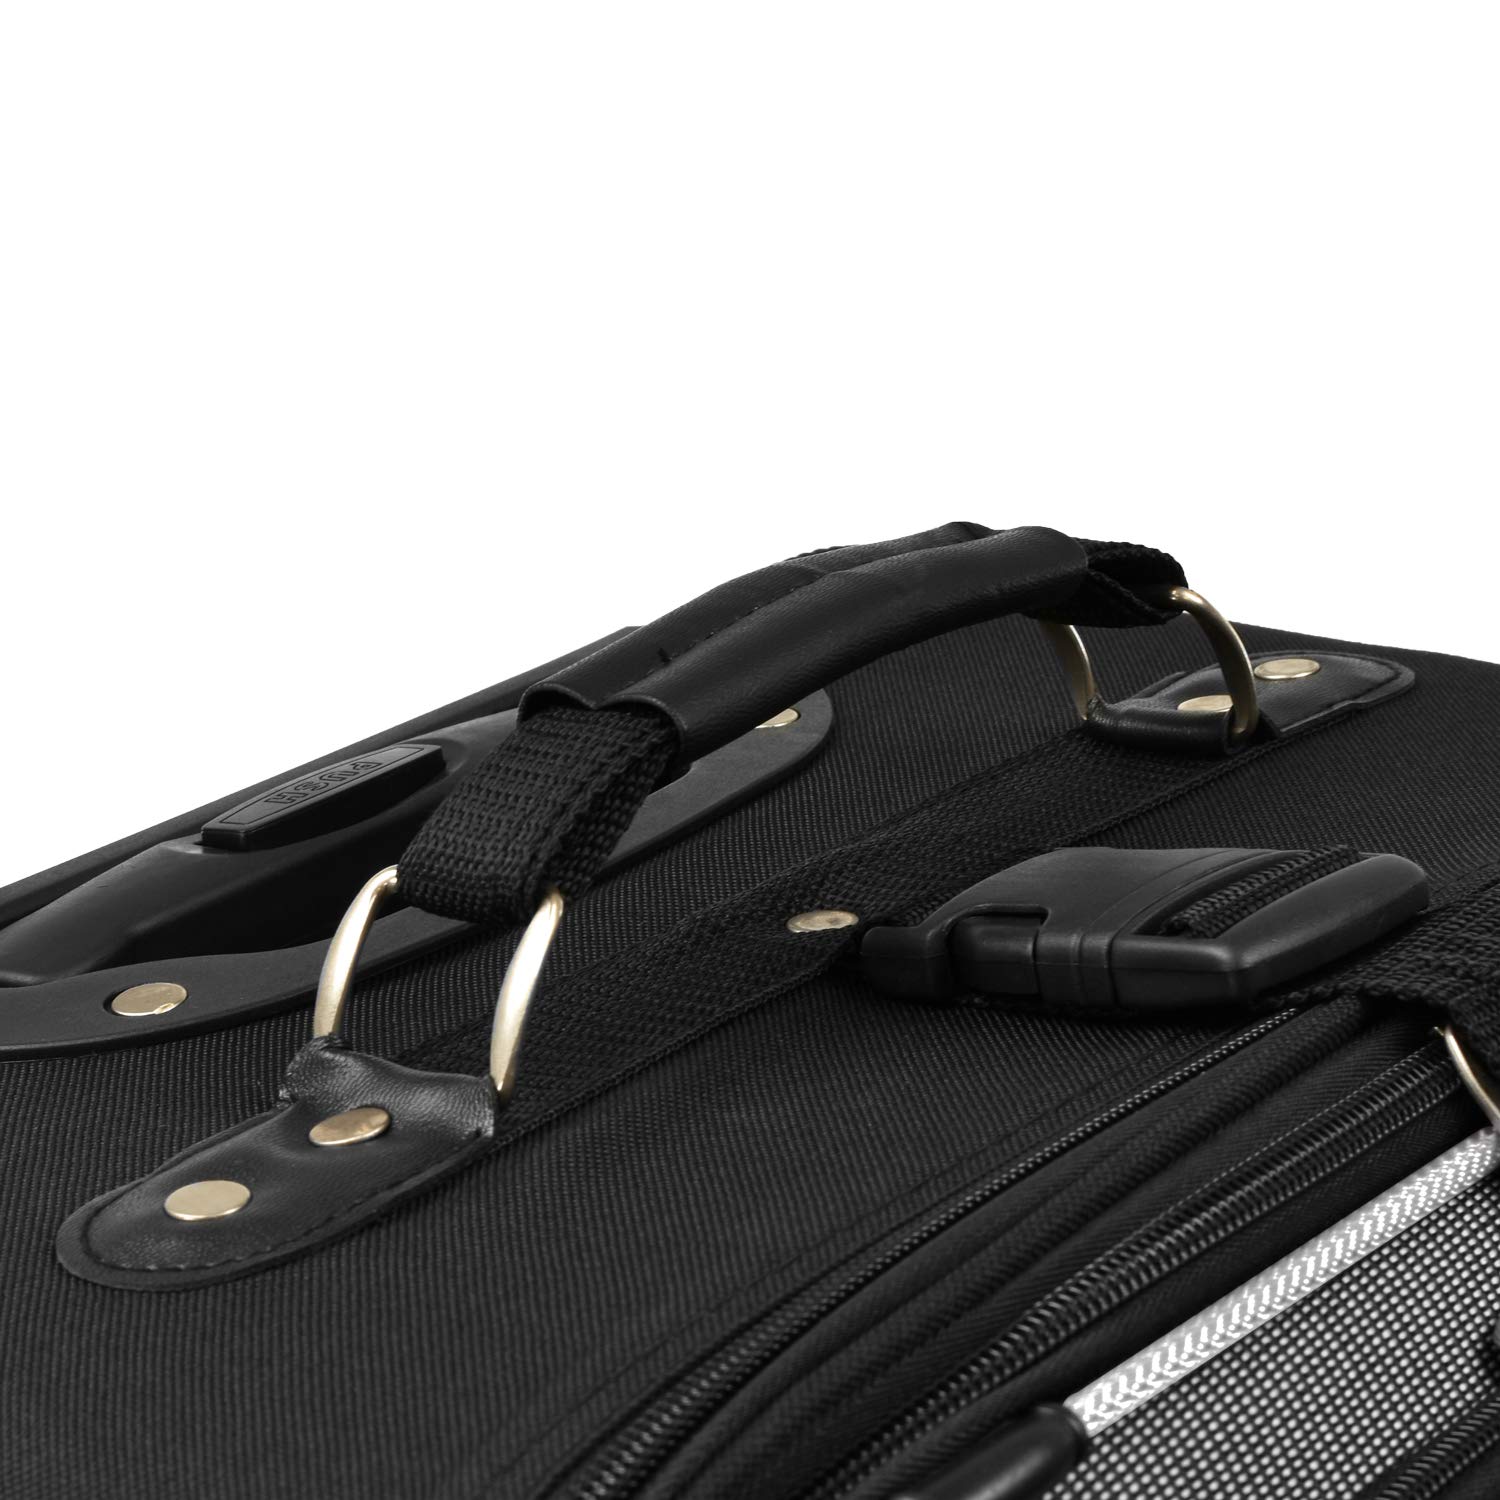 U.S. Traveler New Yorker Lightweight Softside Expandable Travel Rolling Luggage, Grey, 4-Piece Set (15/21/25/29)